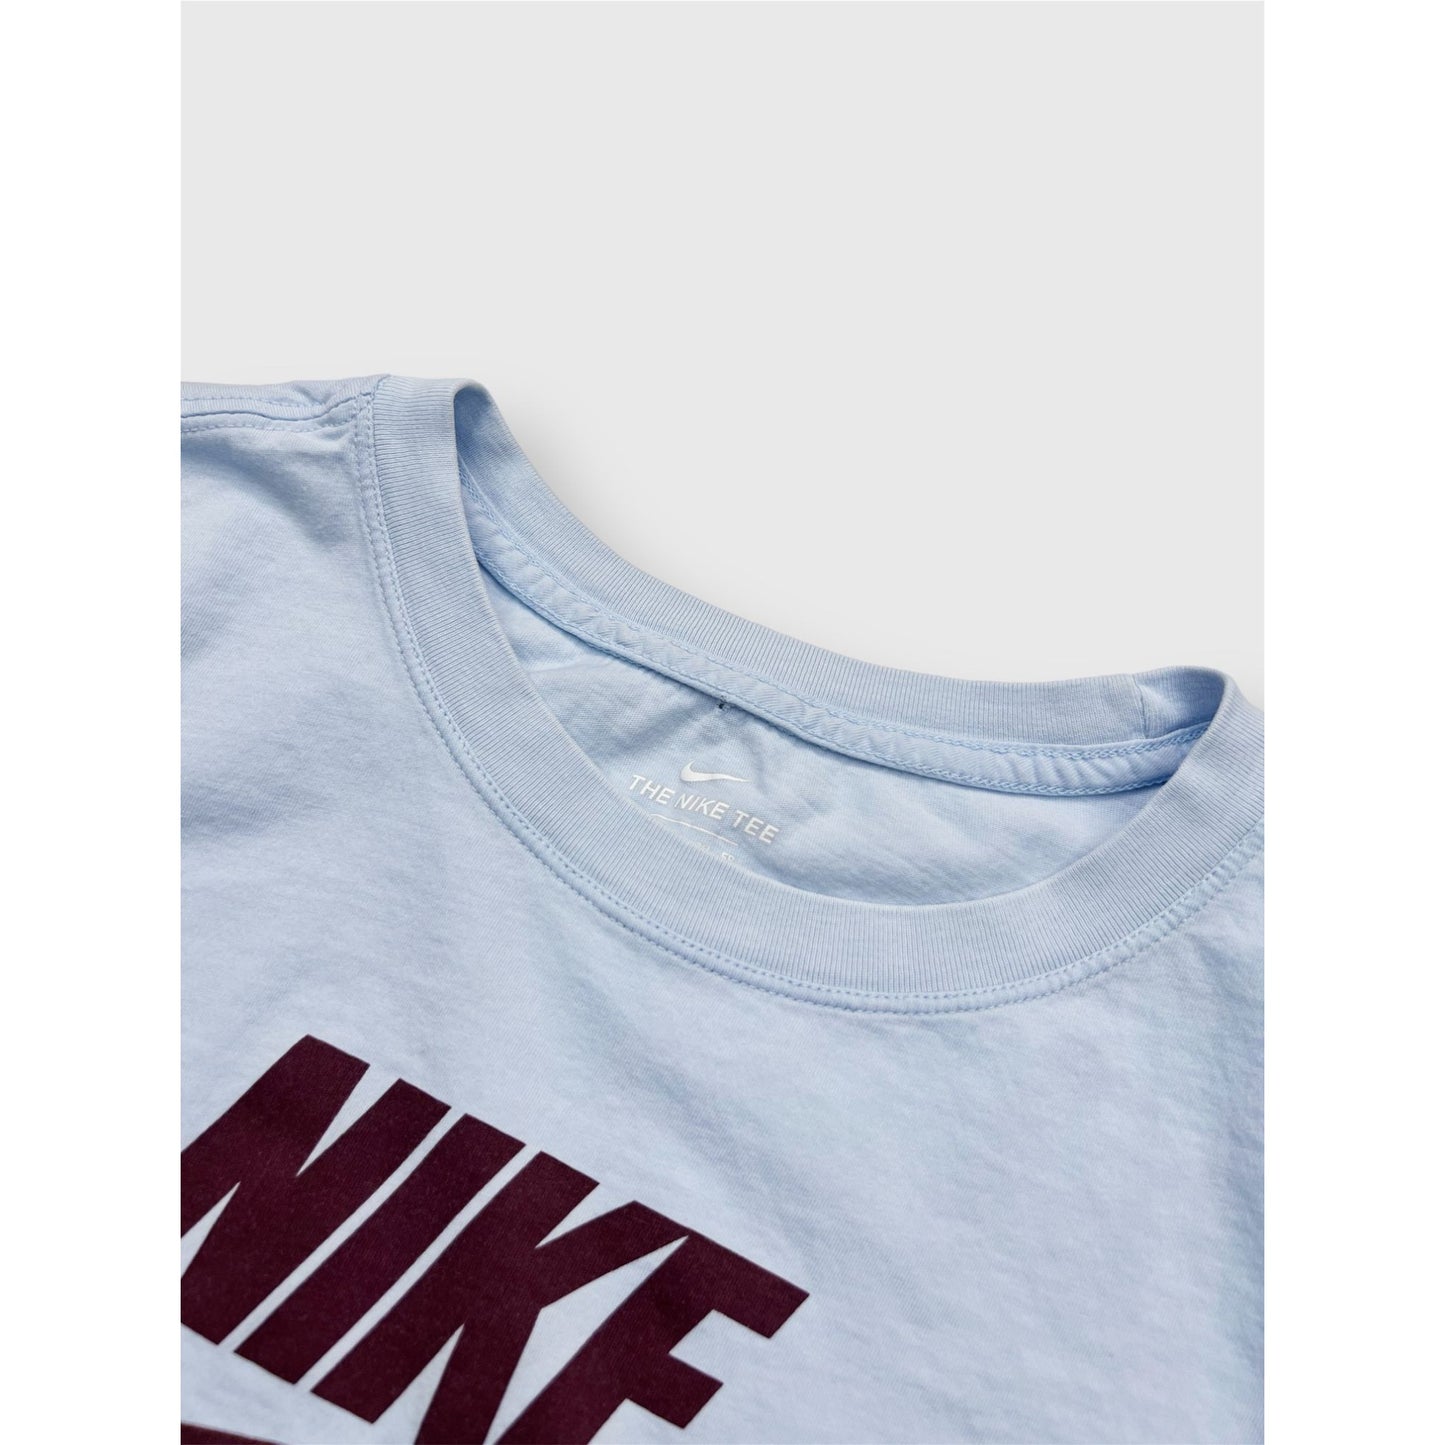 Nike Crop Short Sleeve Shirt - XS